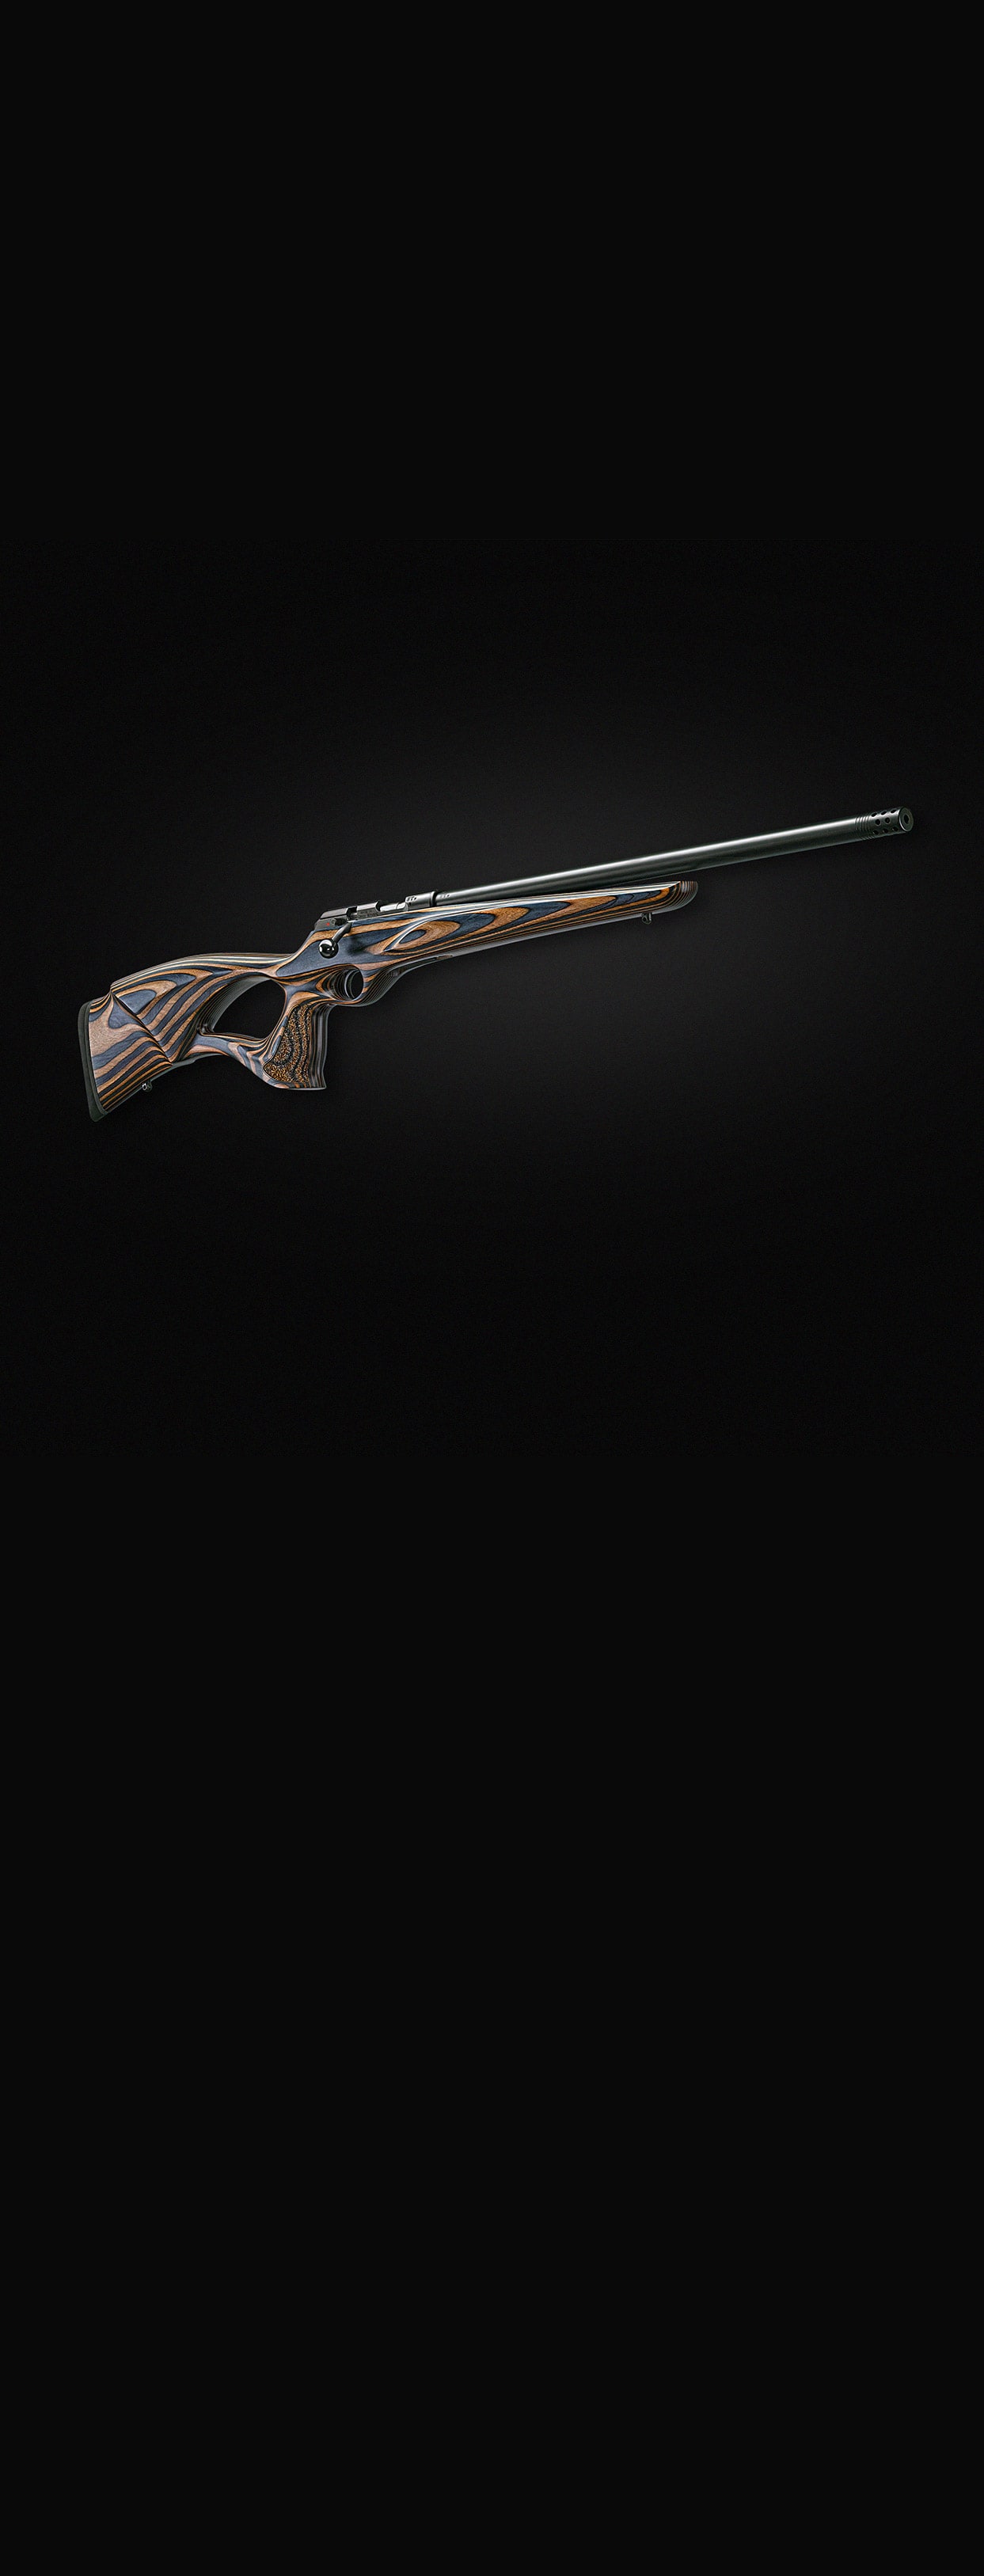 A bullseye for the popular rimfire rifle